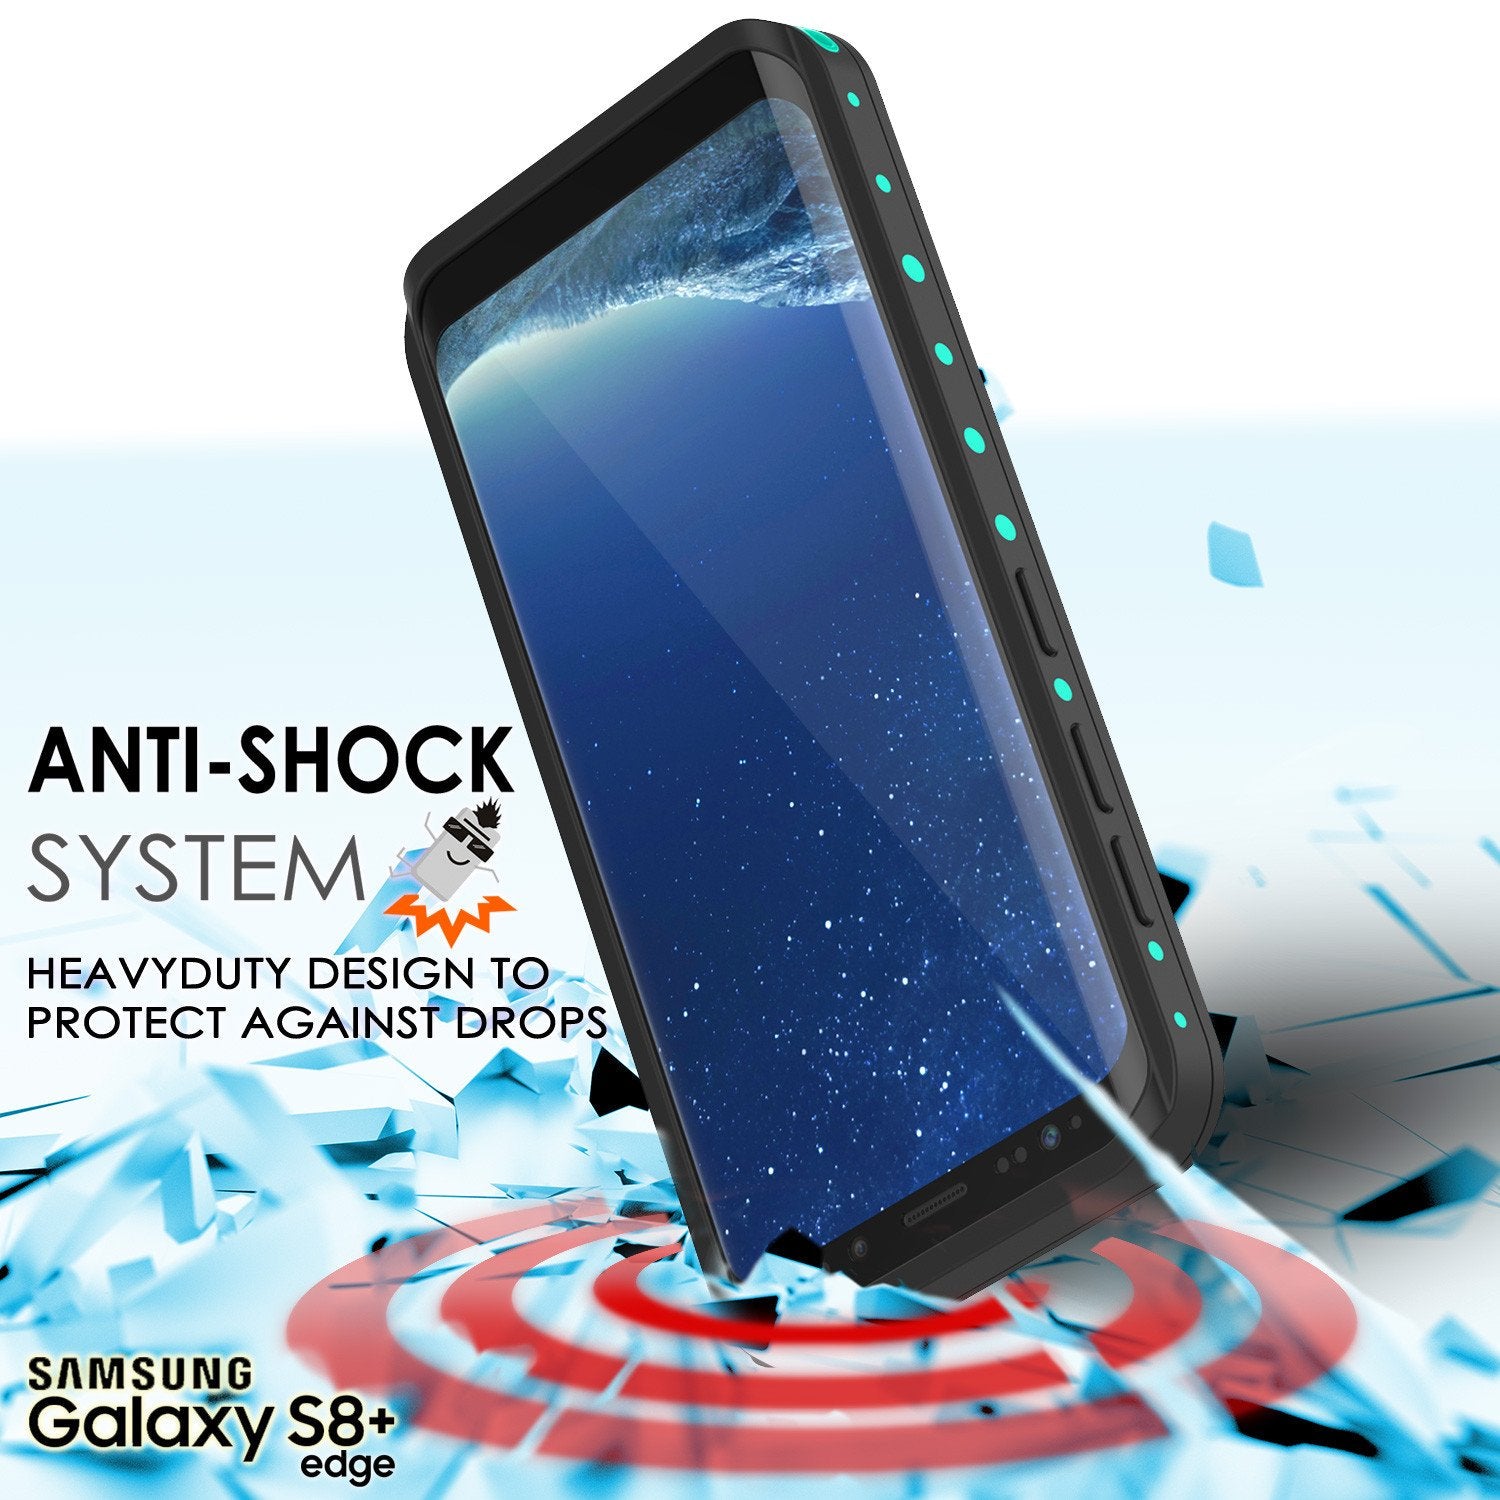 Galaxy S8 Plus Waterproof Case PunkCase StudStar Teal Thin 6.6ft Underwater IP68 Shock/Snow Proof - PunkCase NZ